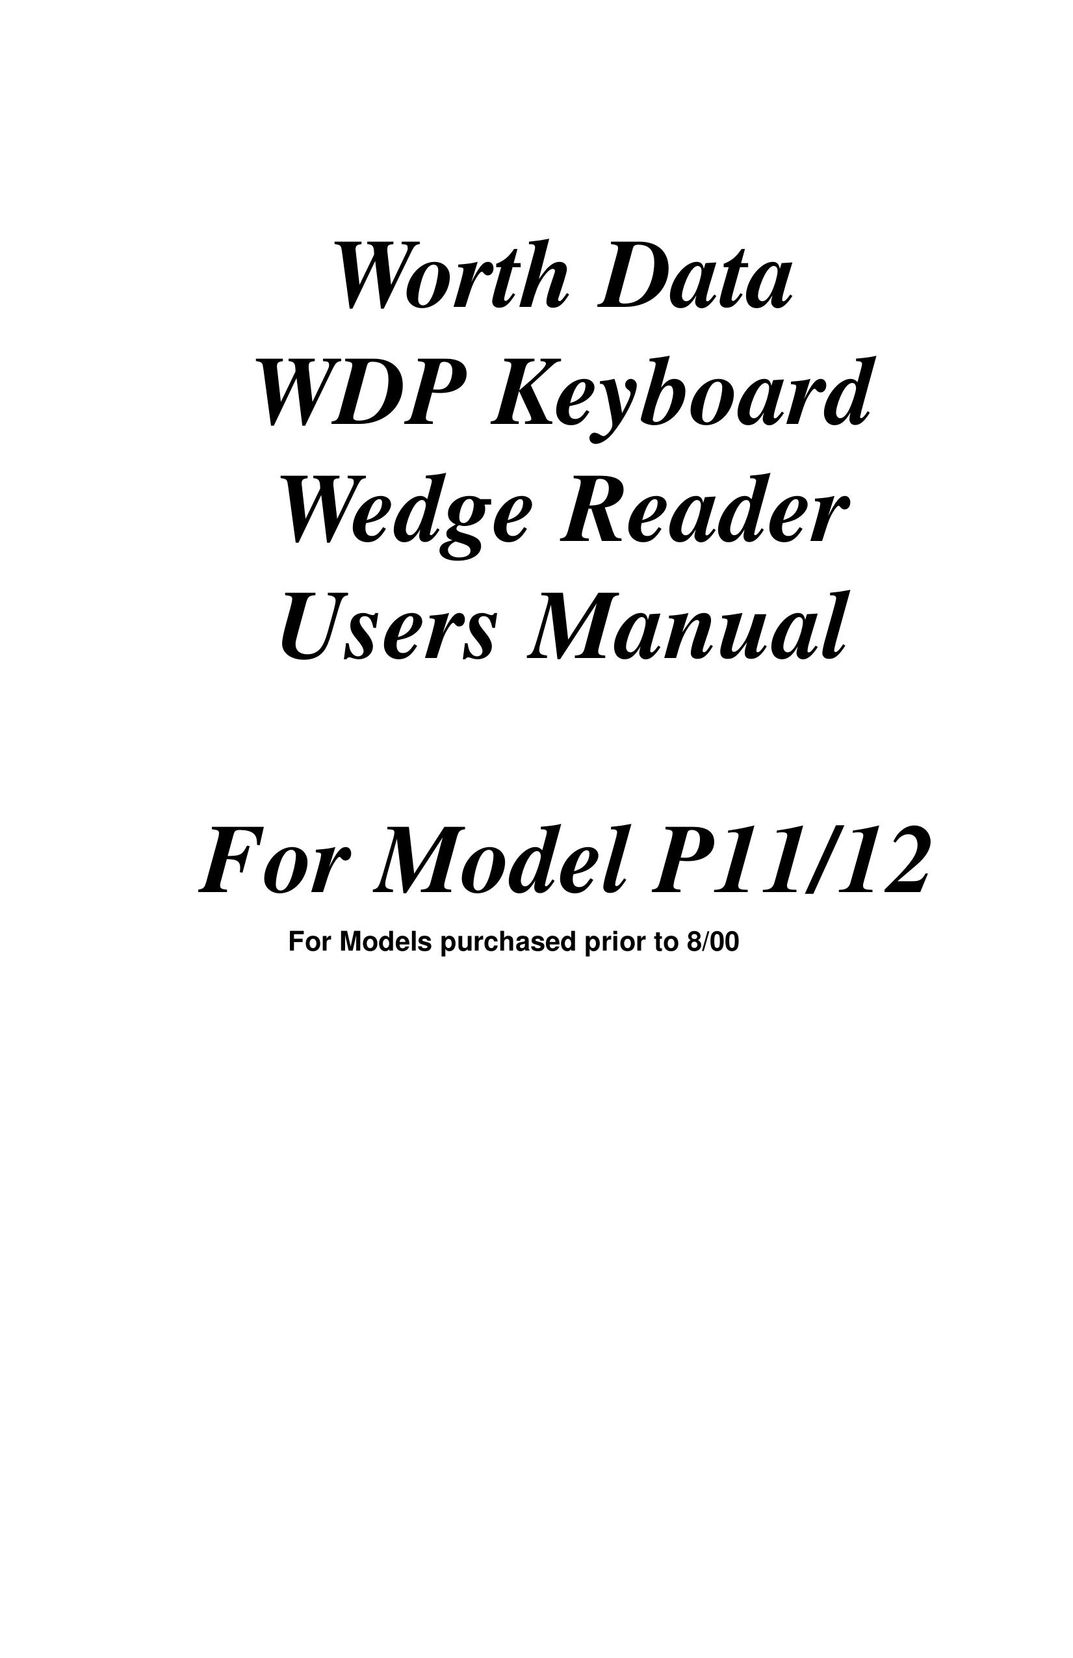 Worth Data P11/12 Scanner User Manual